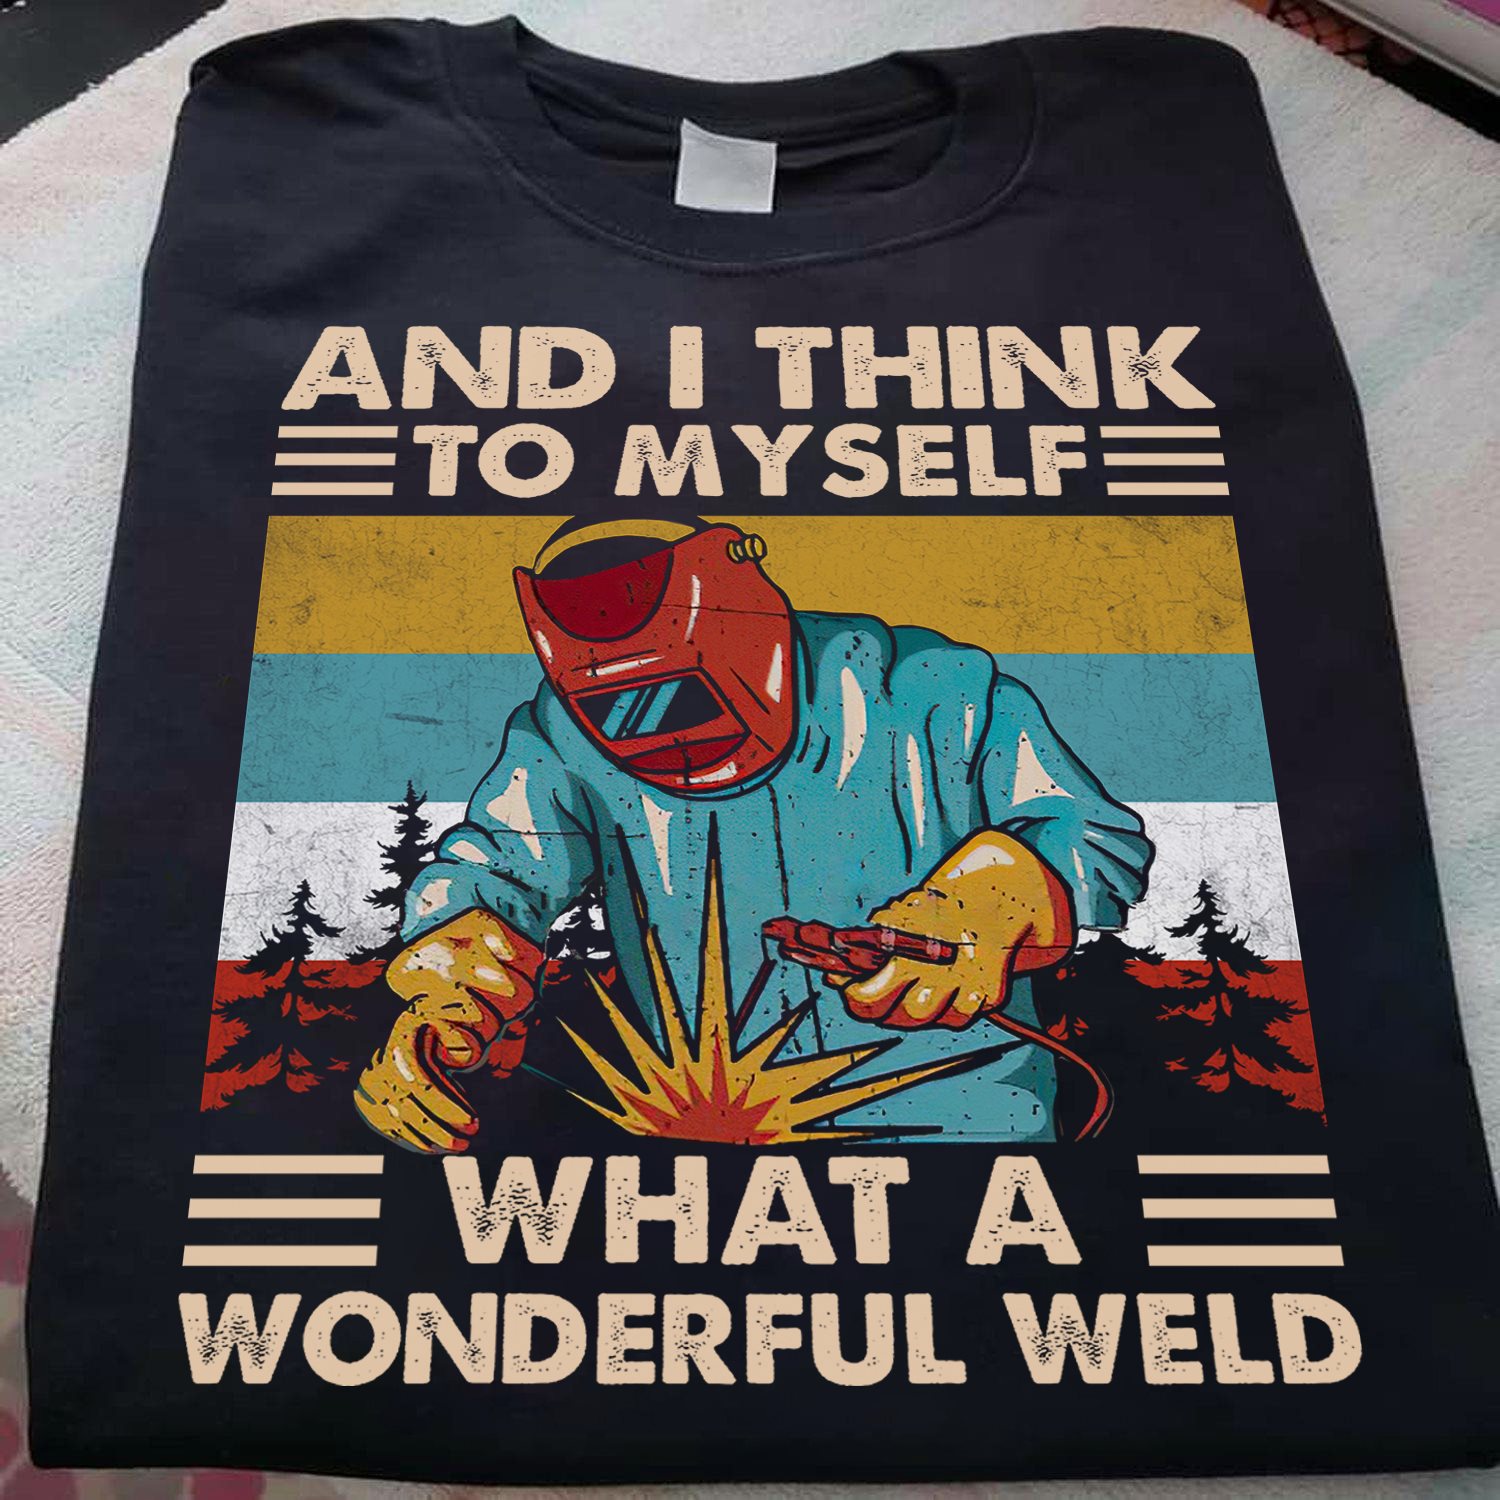 And I think to myself what a wonderfull weld